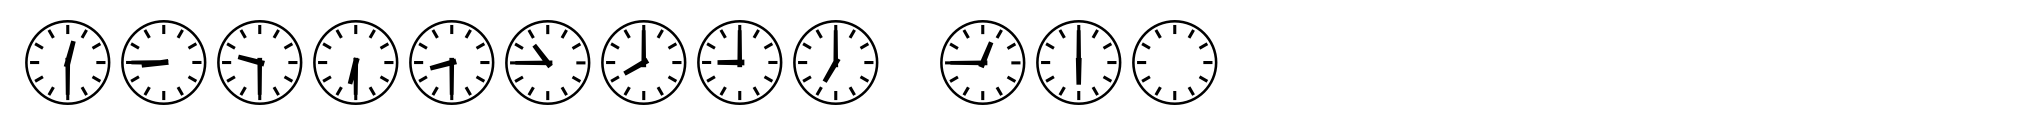 Clocktime Day image